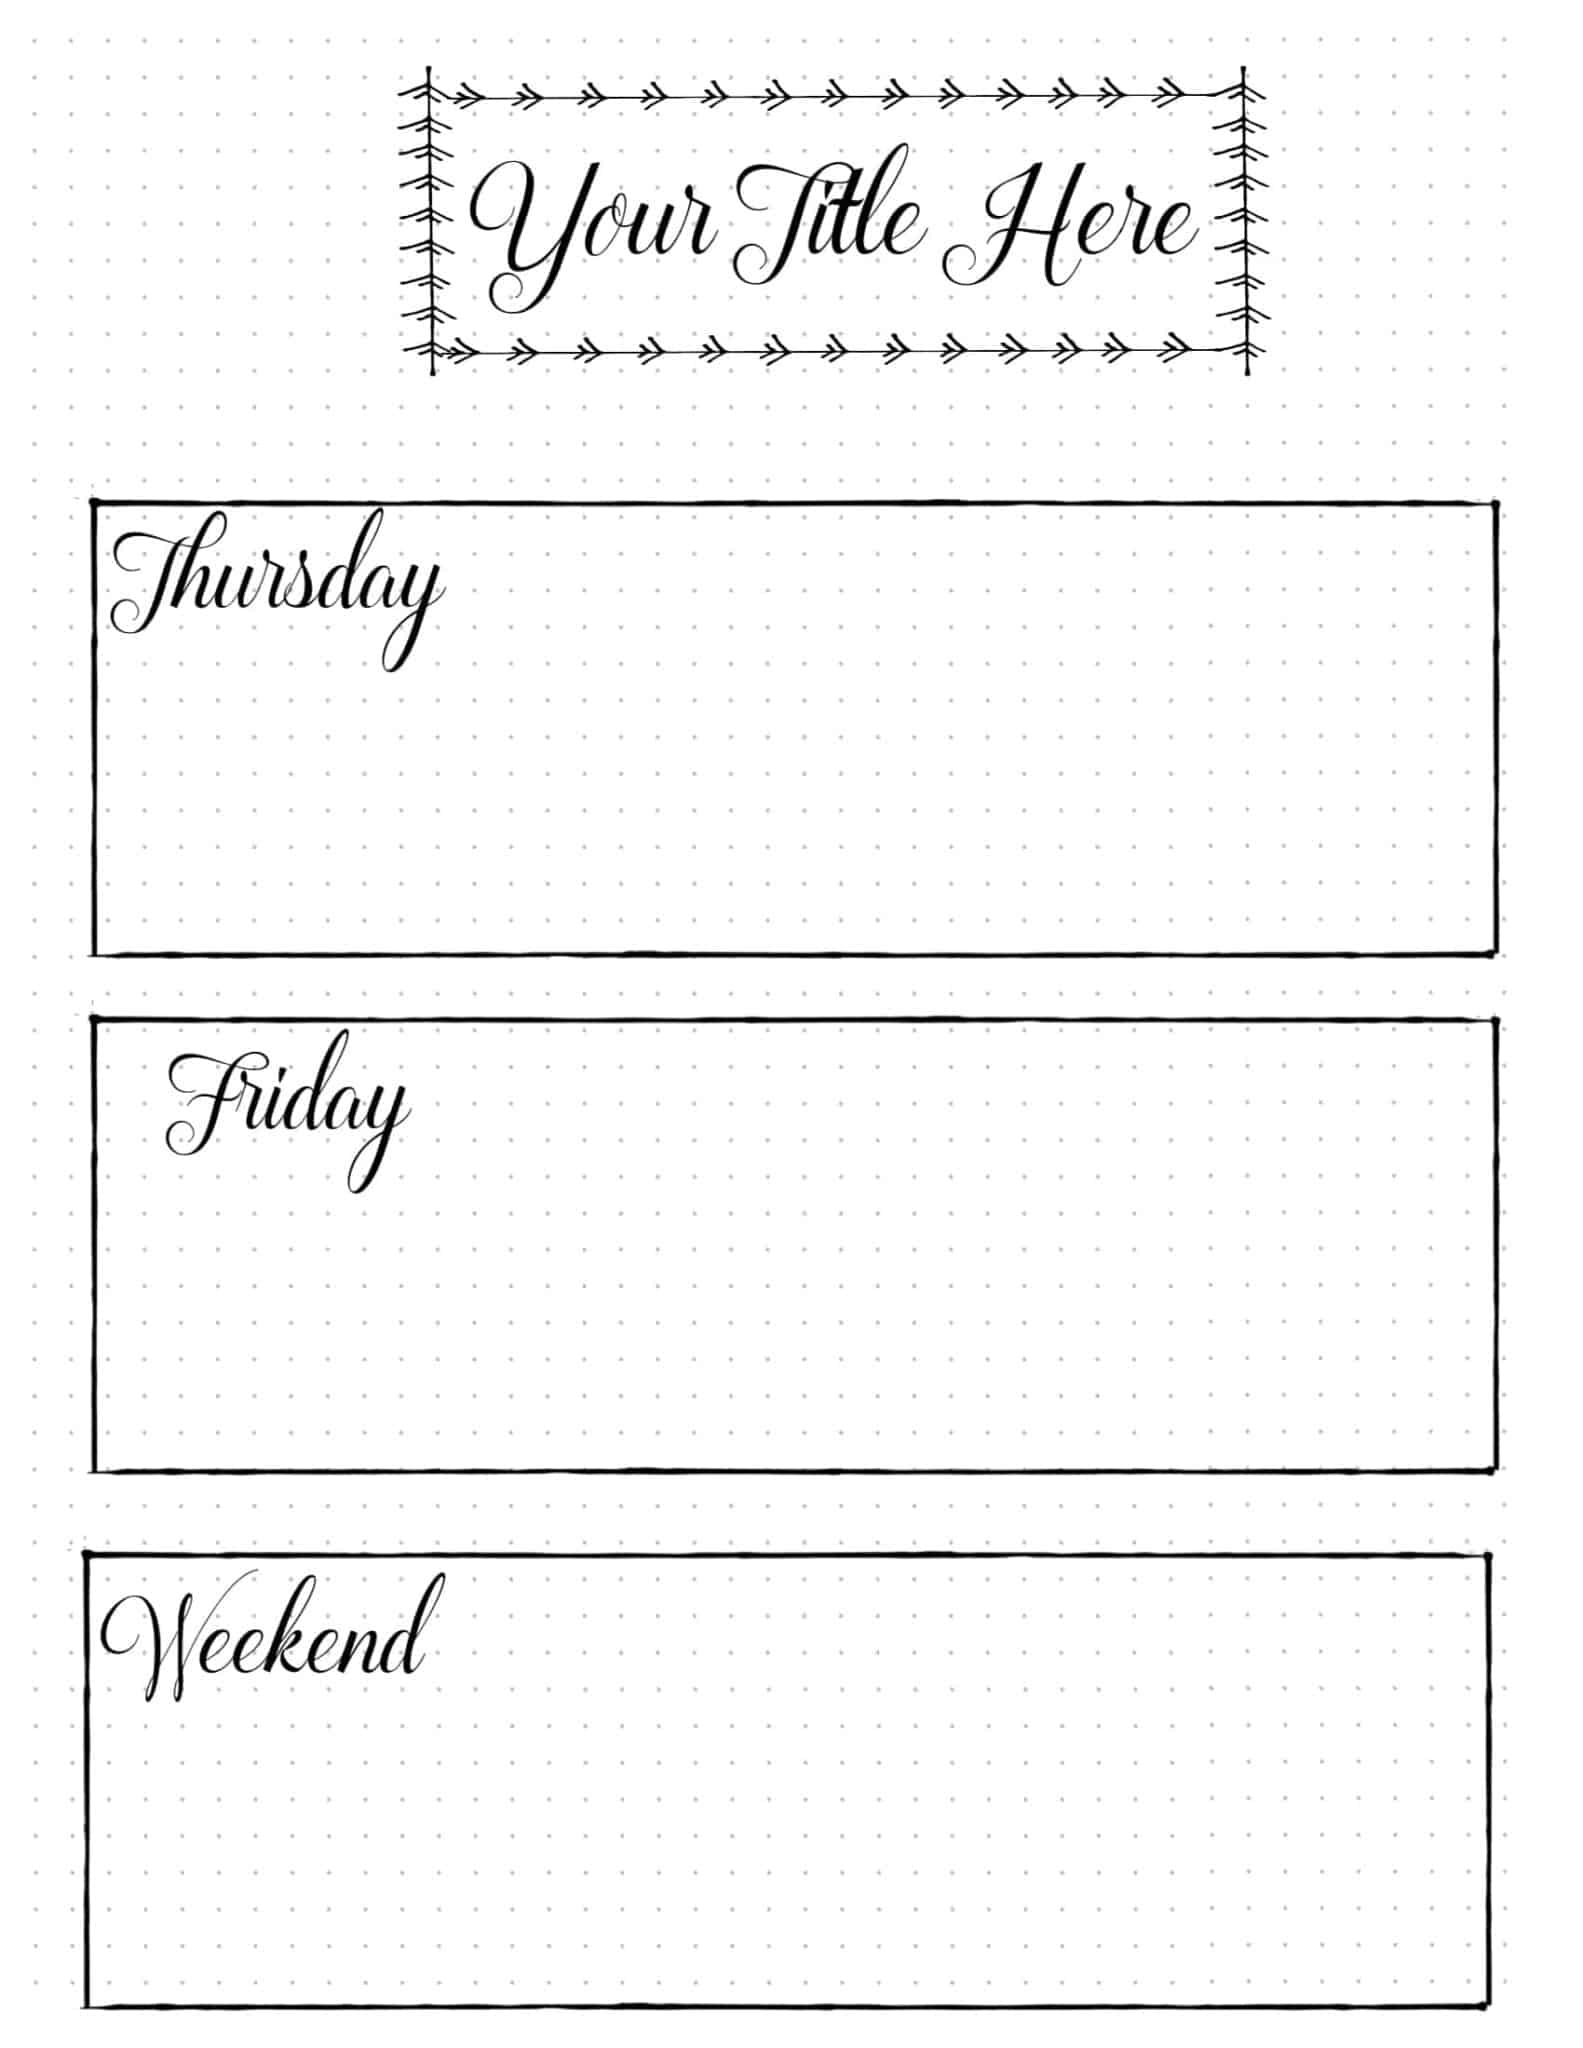 FREE Printable and Customizable Calendar Journal